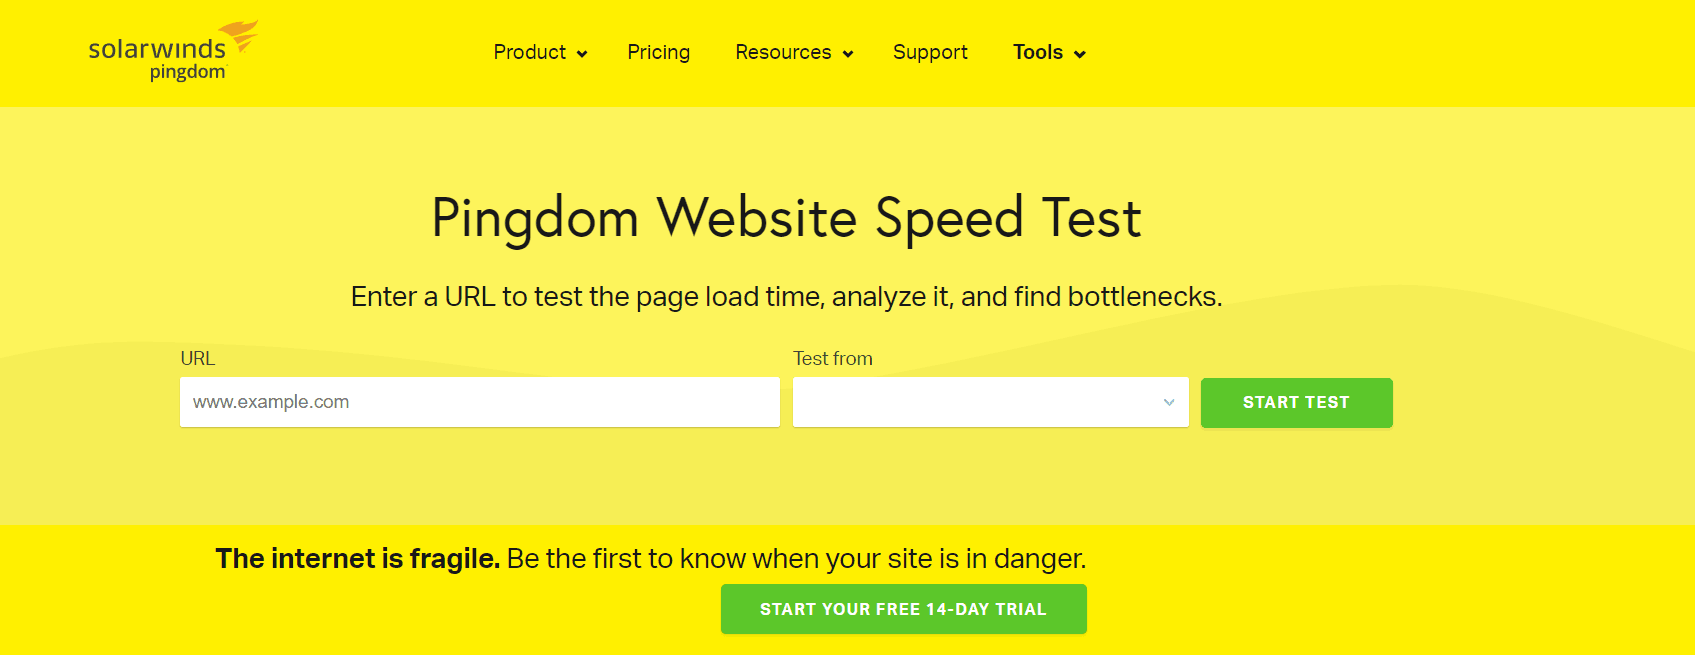 Solarwinds Pingdom Speed Test Homepage